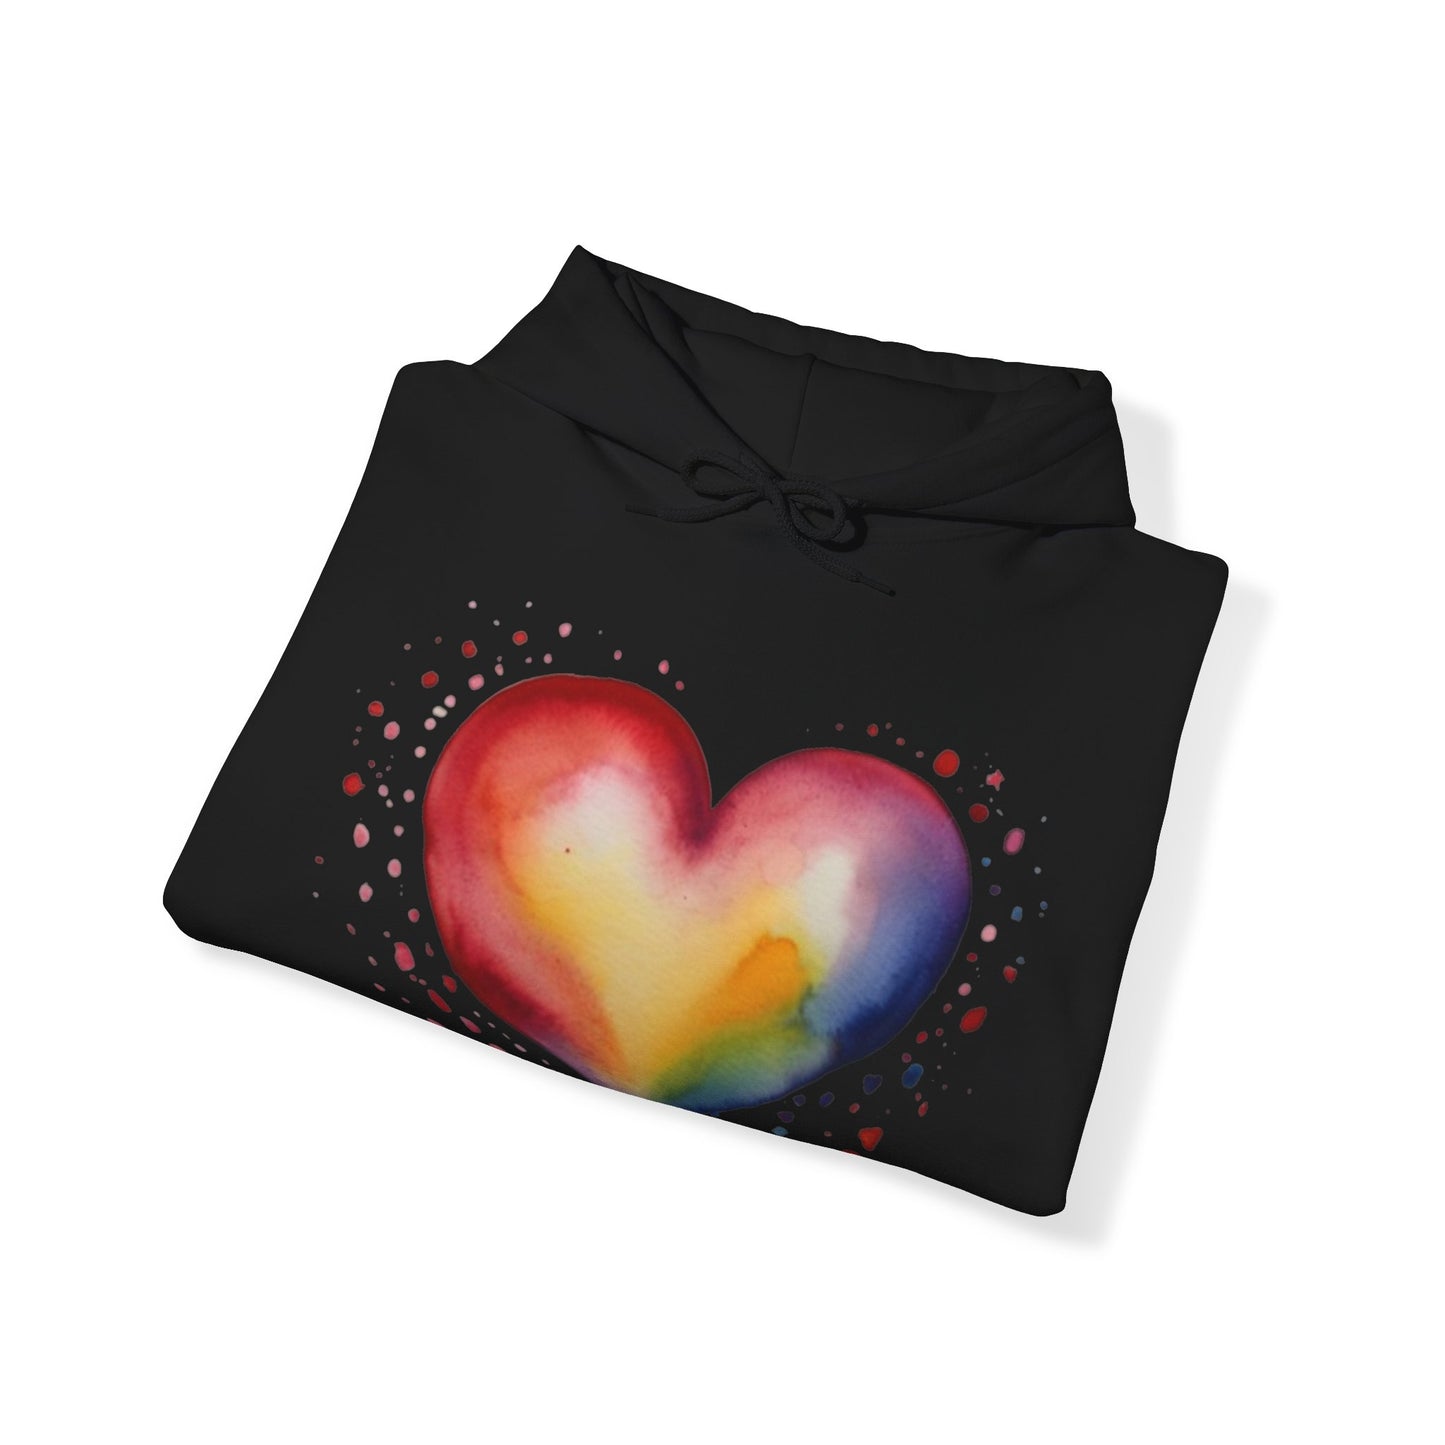 Colourful Watercolour Love Heart - Unisex Hooded Sweatshirt